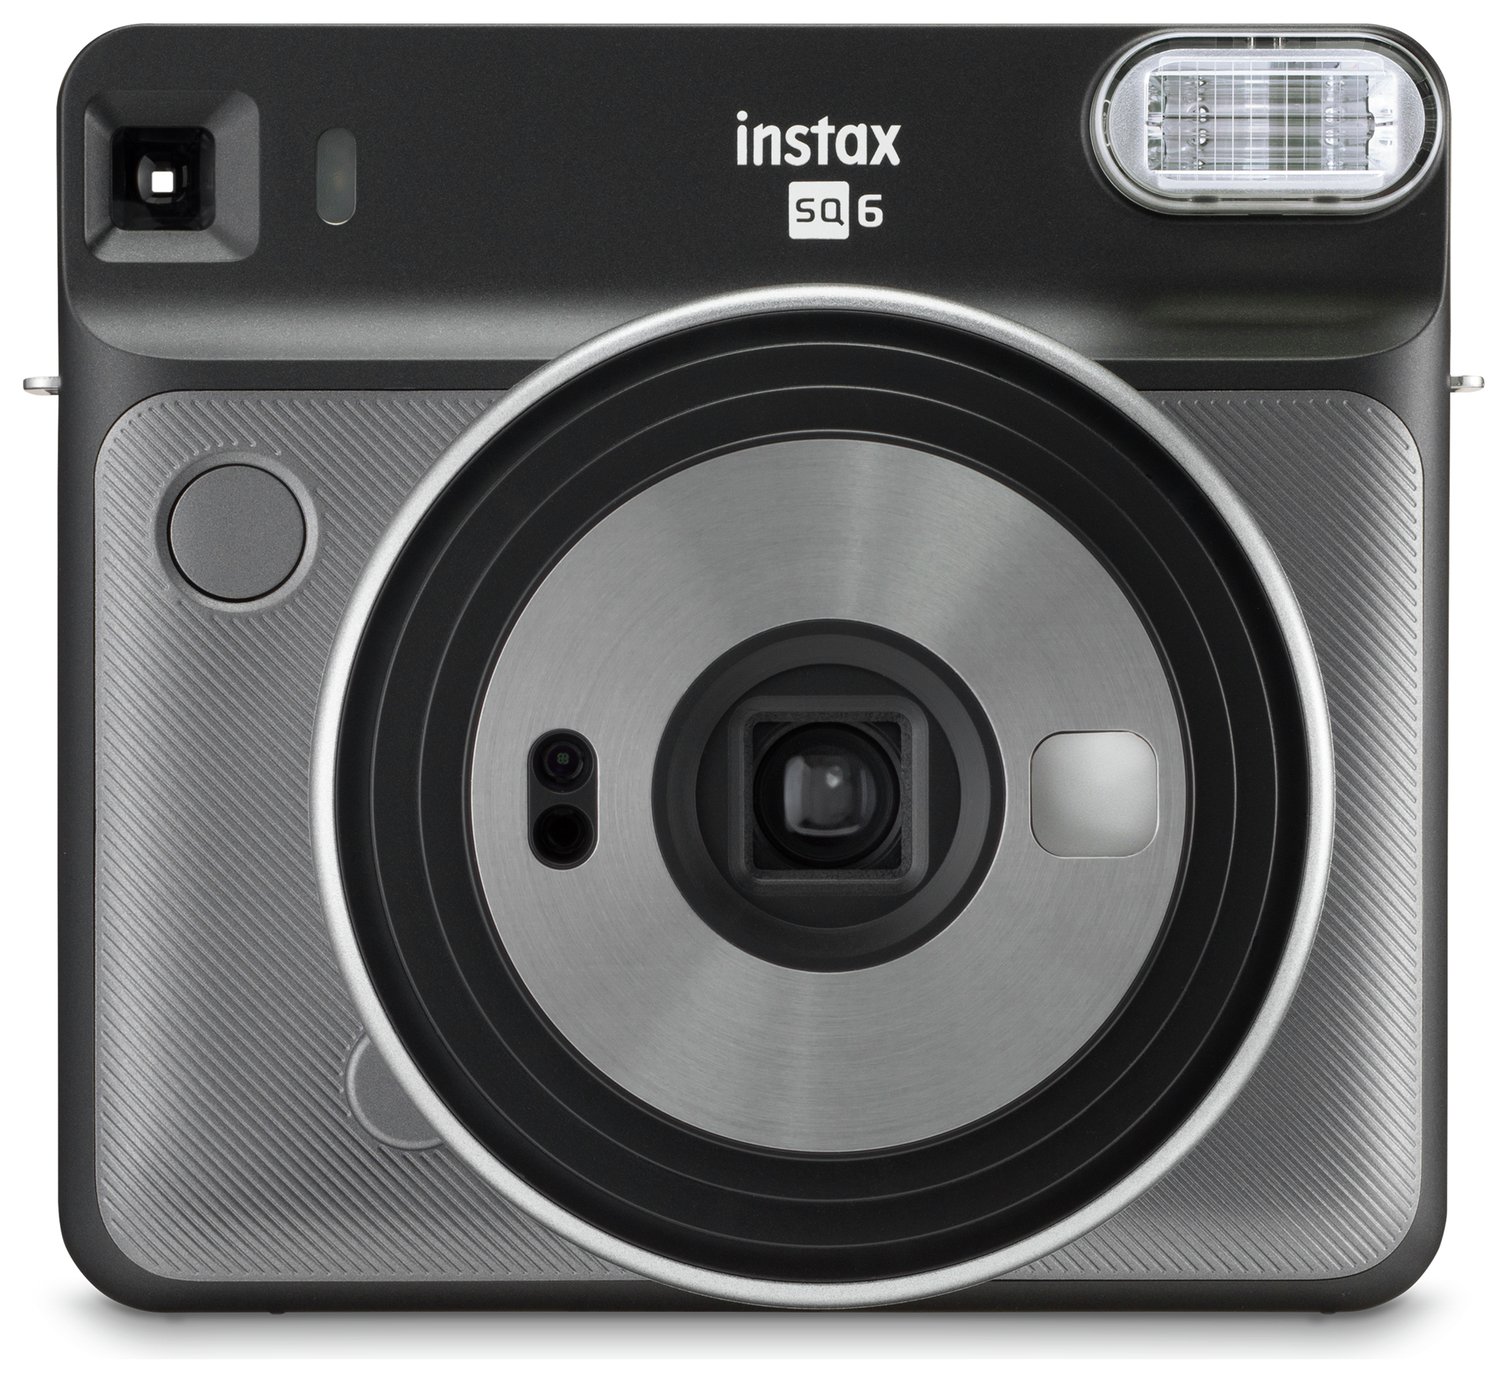 instax SQ 6 Instant Camera